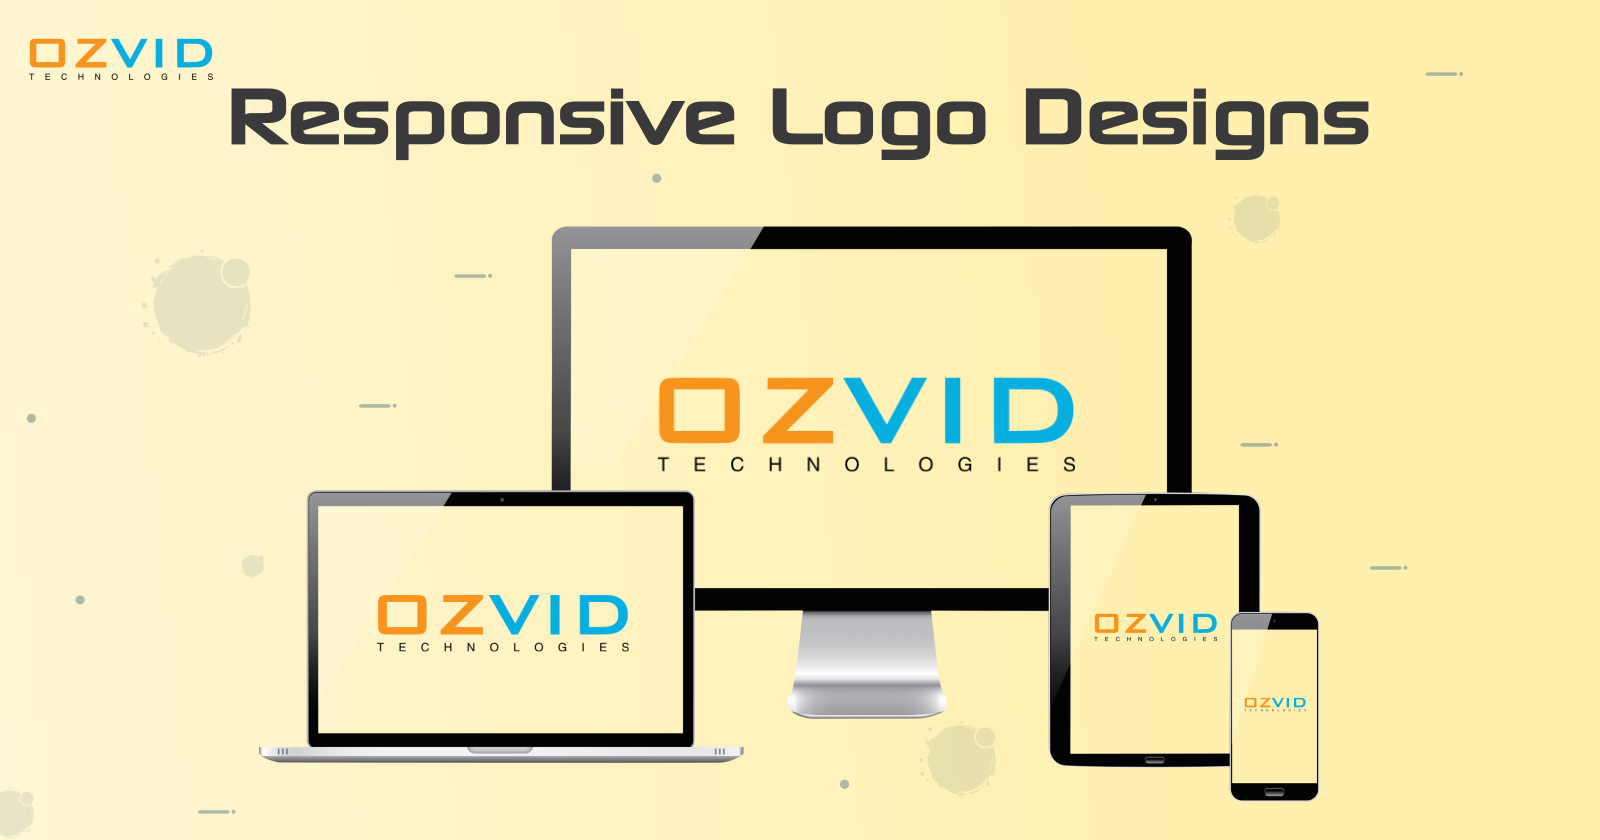 Get Responsive Logo Designed for Your Business